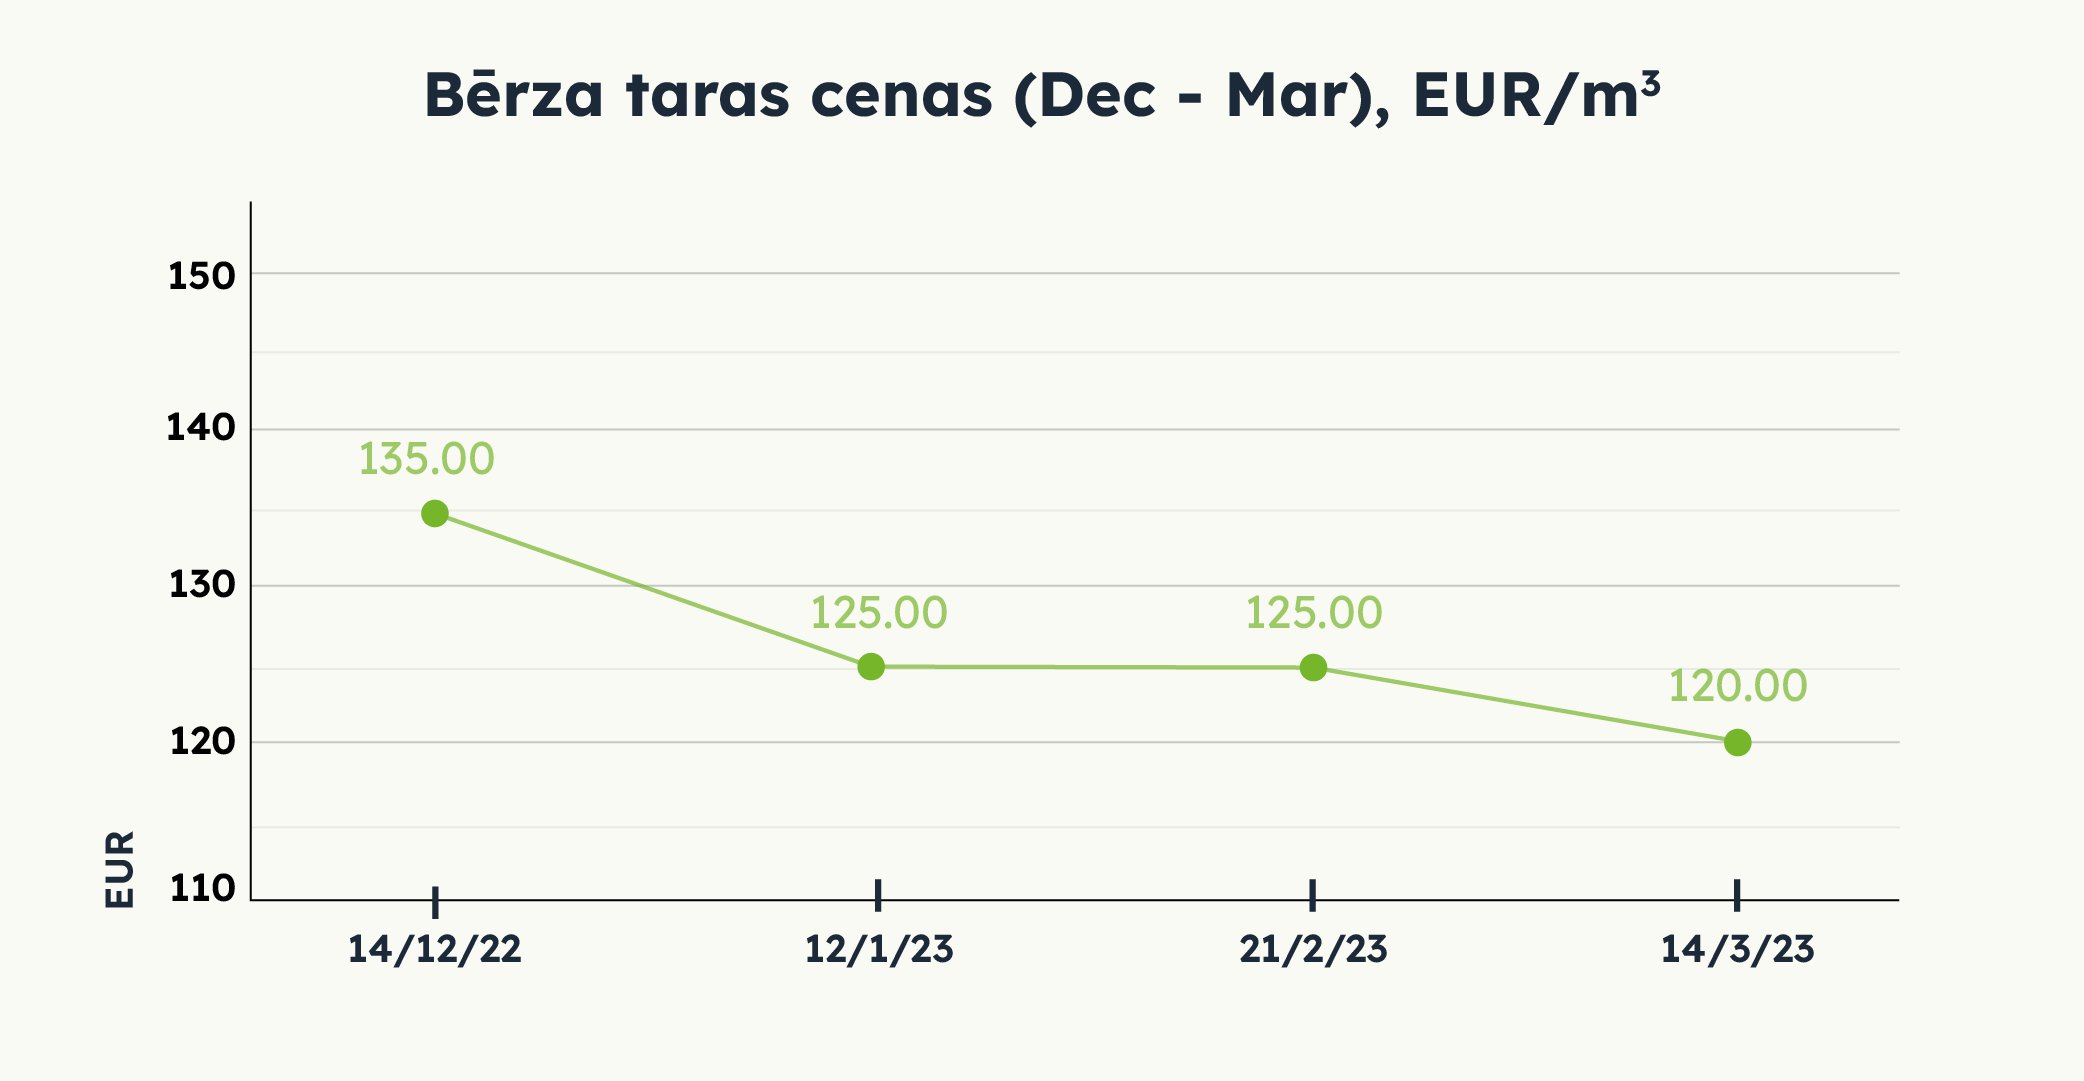 Bērza taras cenas (Dec - Mar), EUR/m3